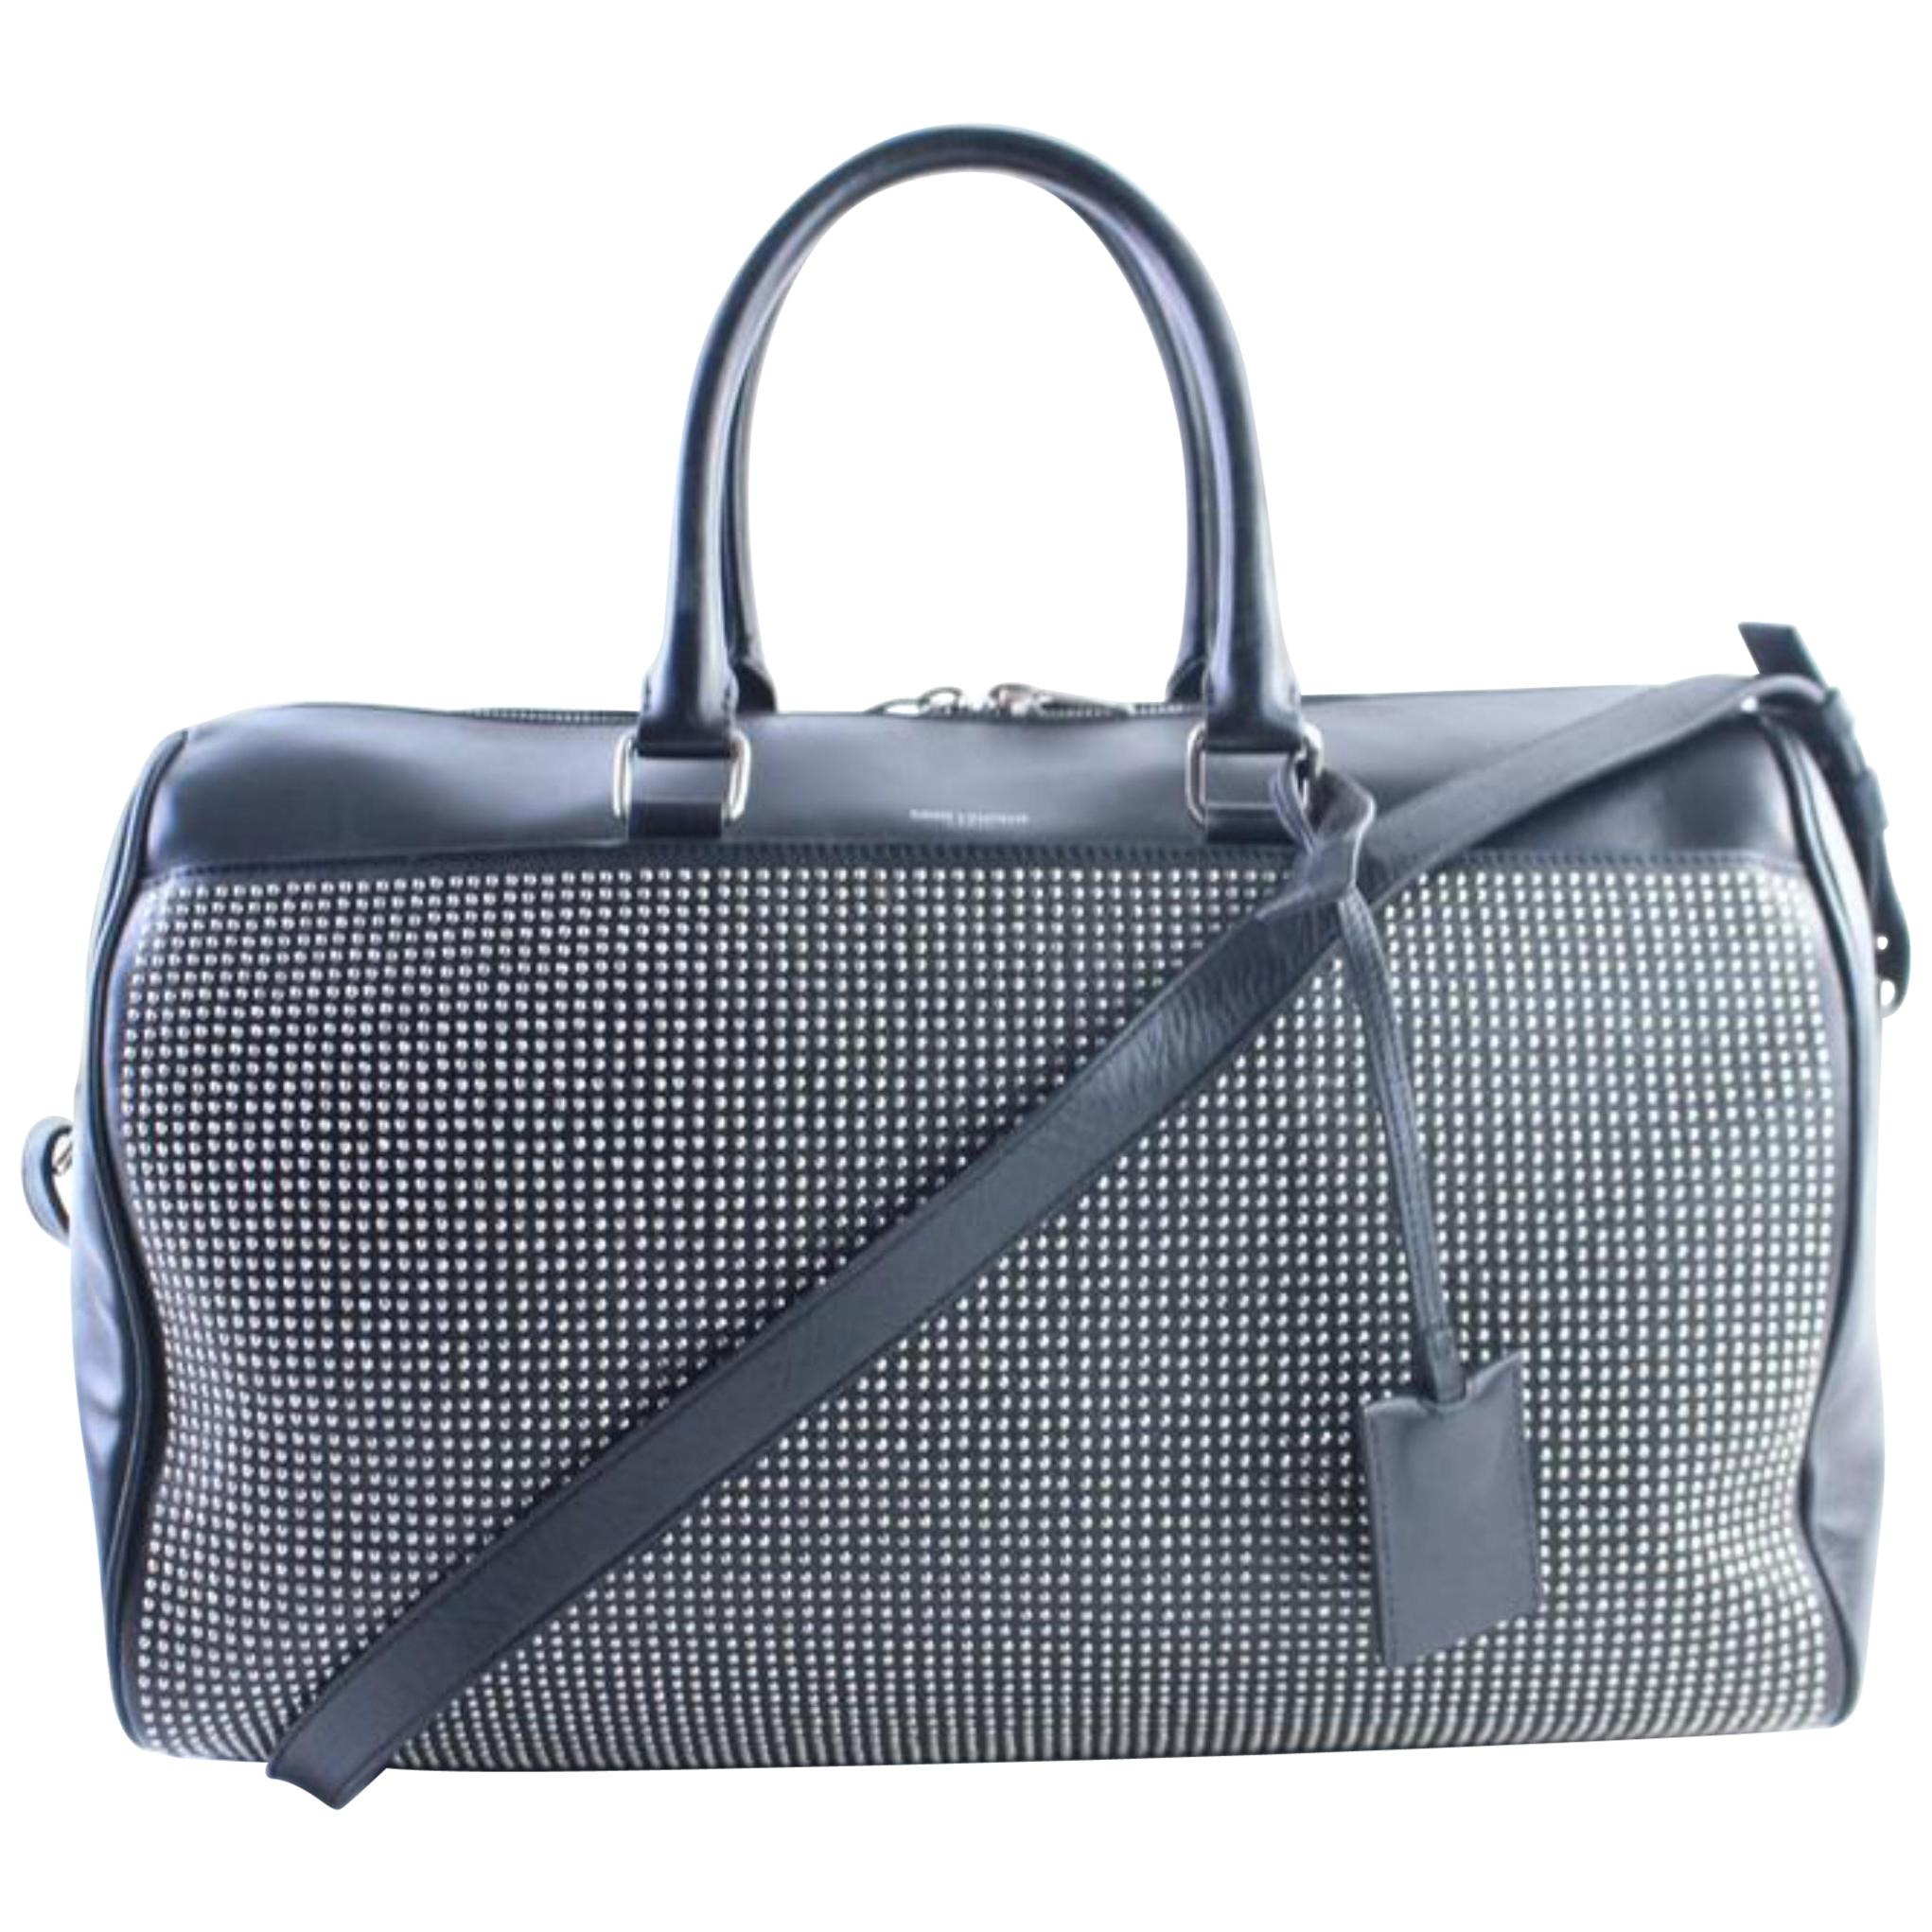 Saint Laurent Duffle Studded 6 Hour 10mr0503 Black Leather Weekend/Travel Bag For Sale